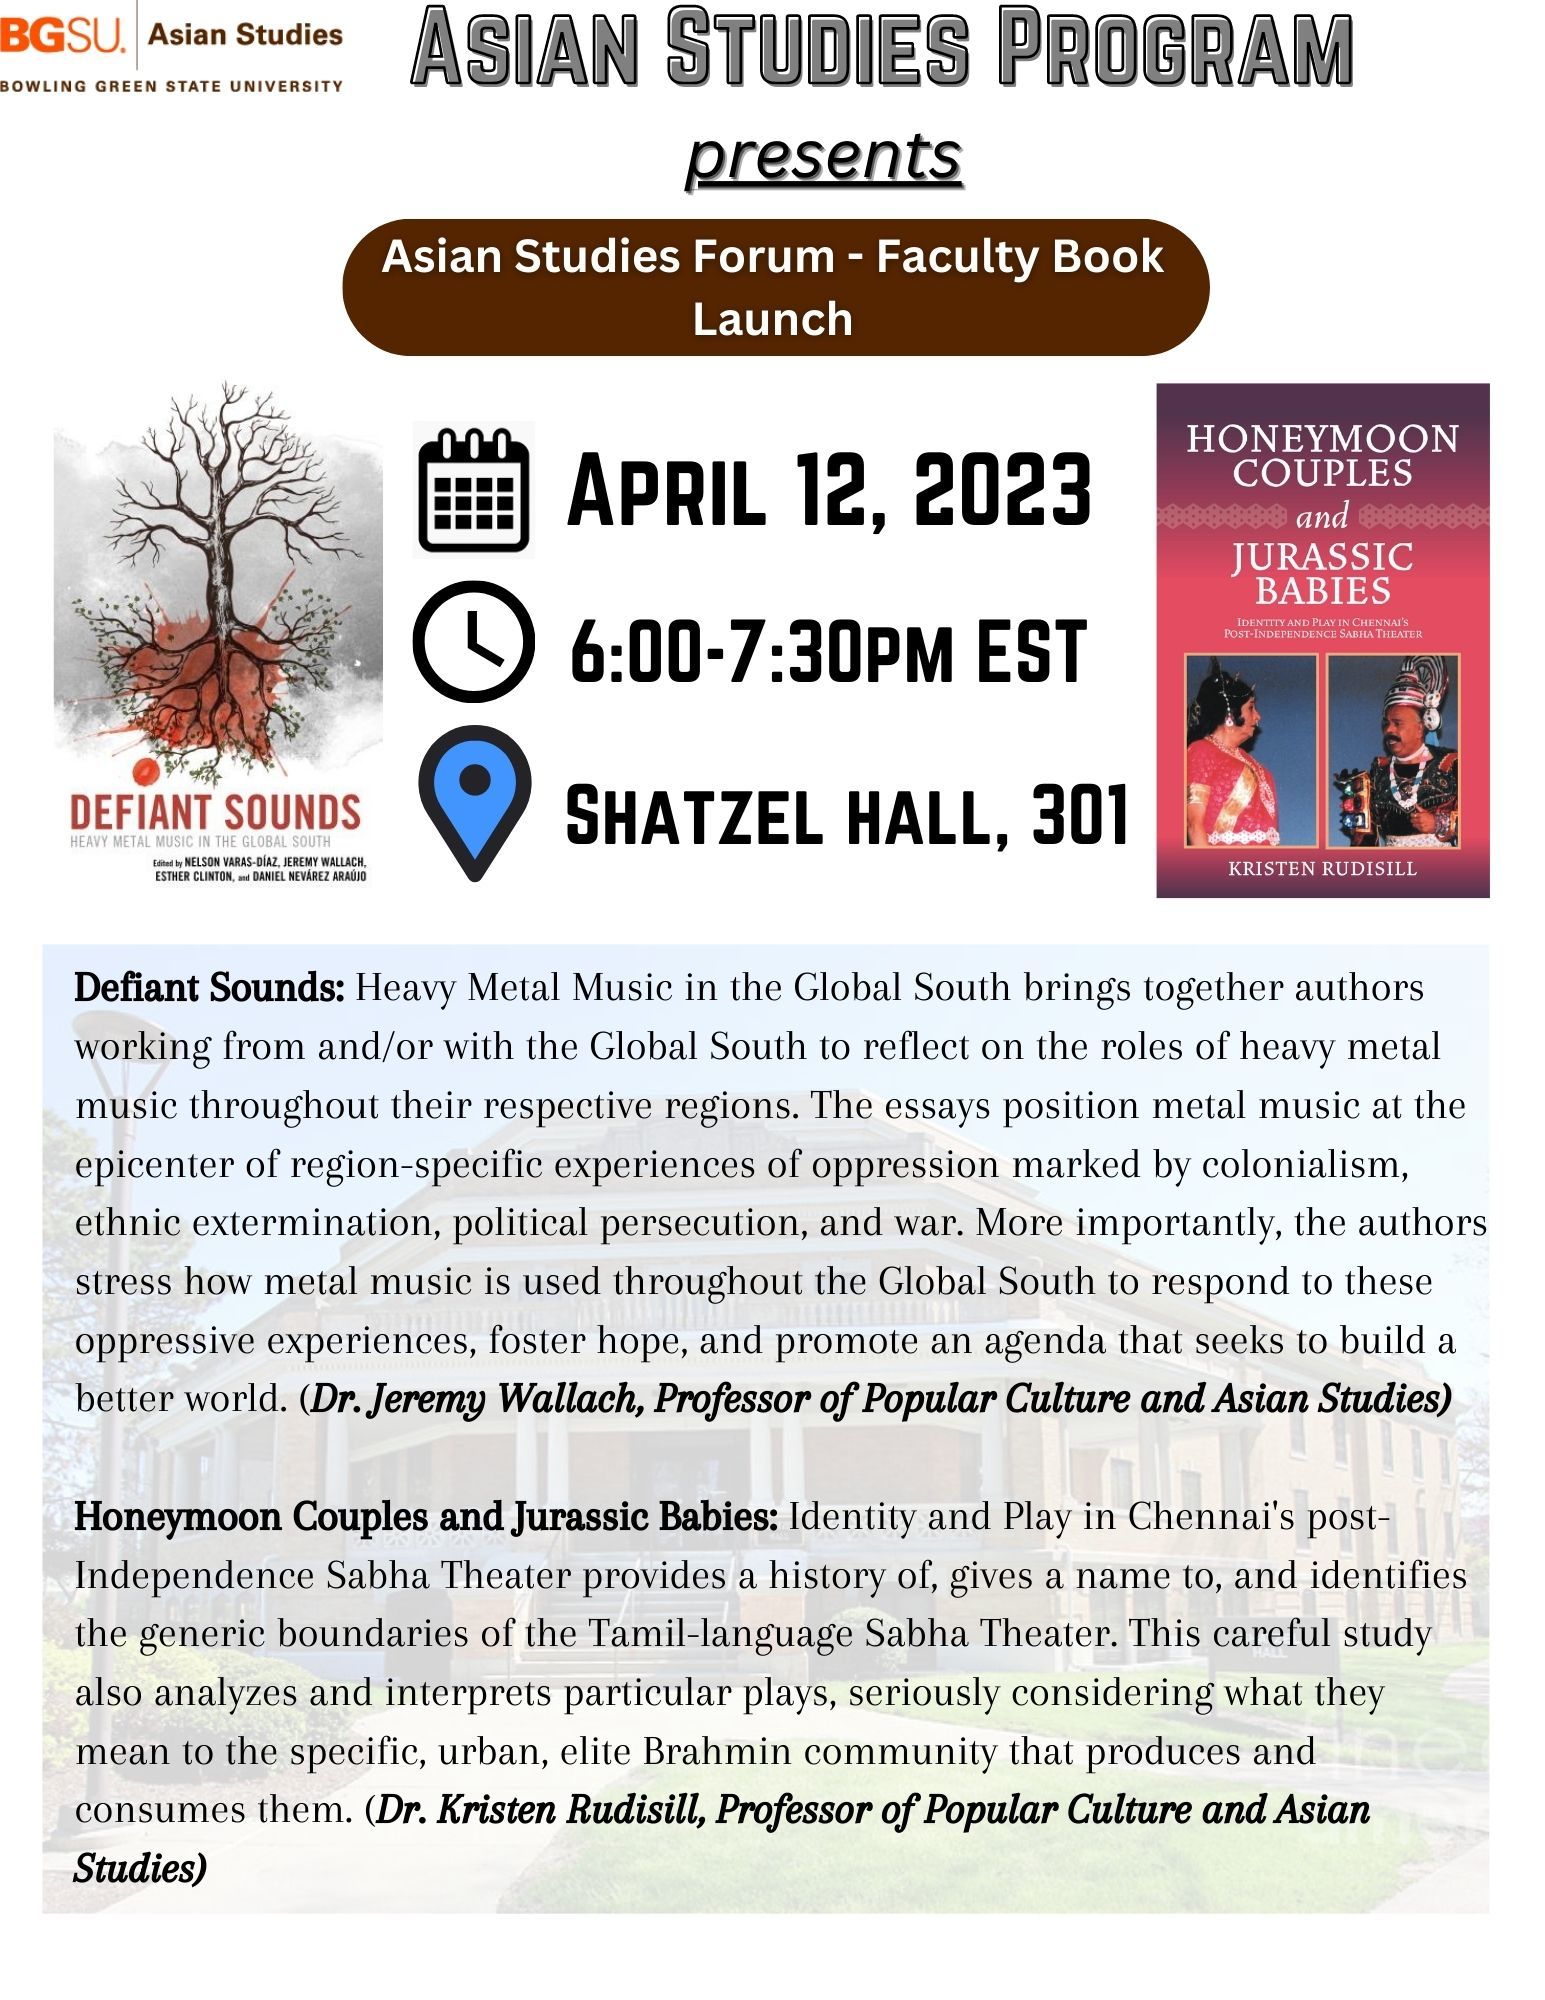 Asian Studies Forum - Faculty Book Launch